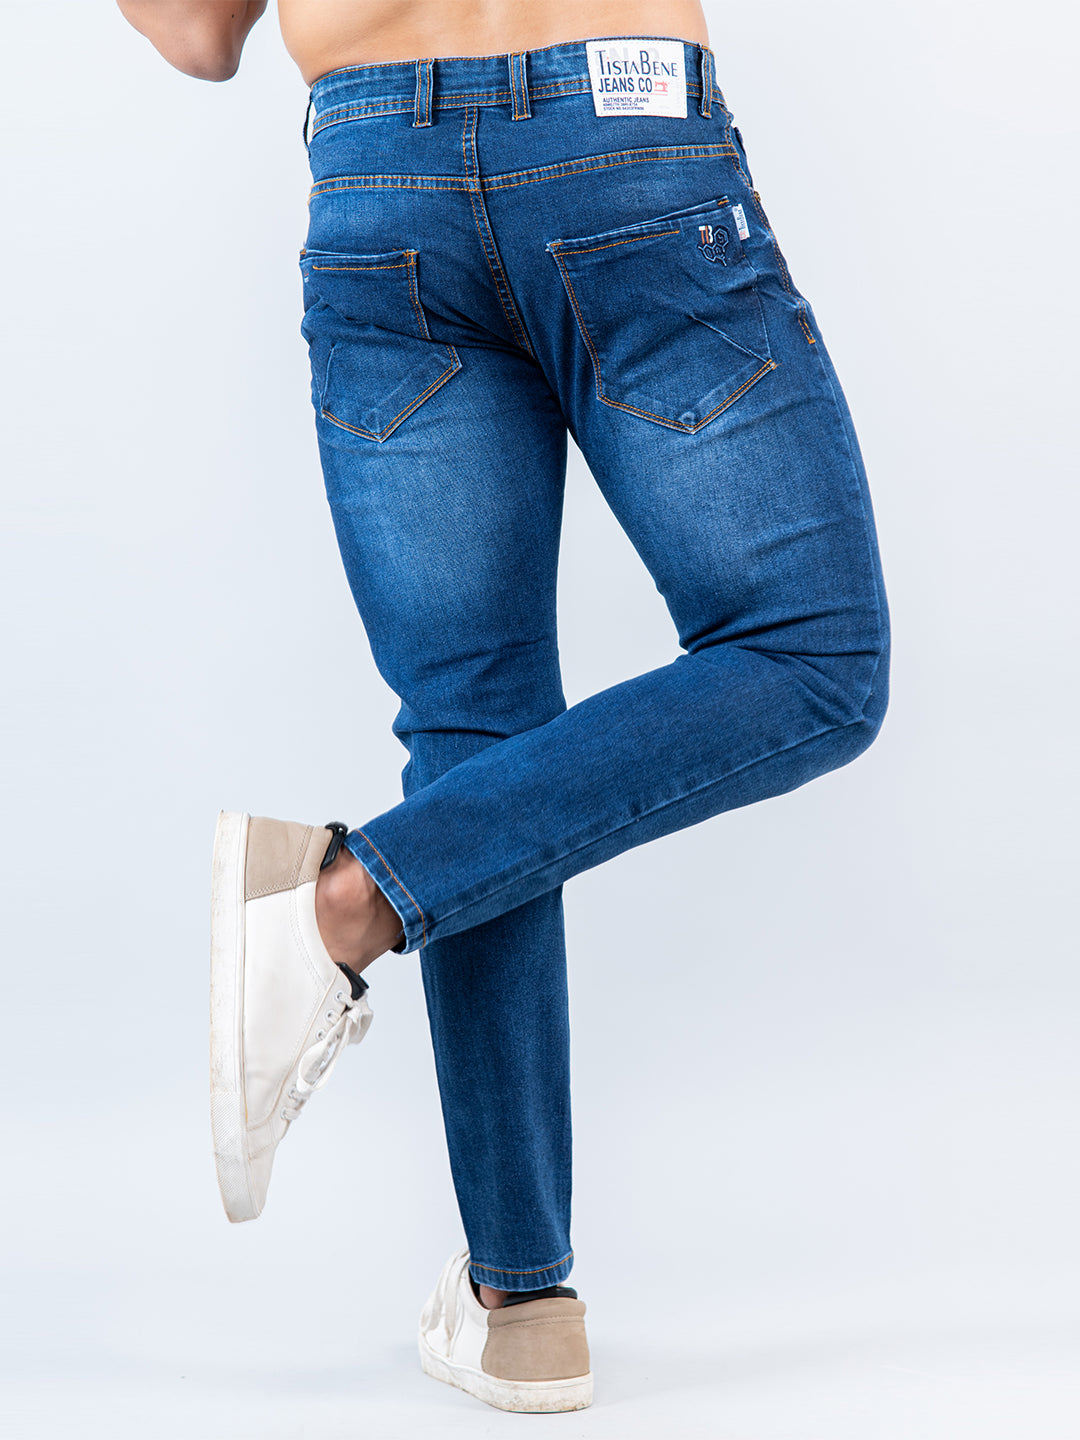 Super Skinny Jeans Stretch Men | Gingtto Skinny Jeans Mens | Skinny Slim  Fit Jeans Men - Jeans - Aliexpress